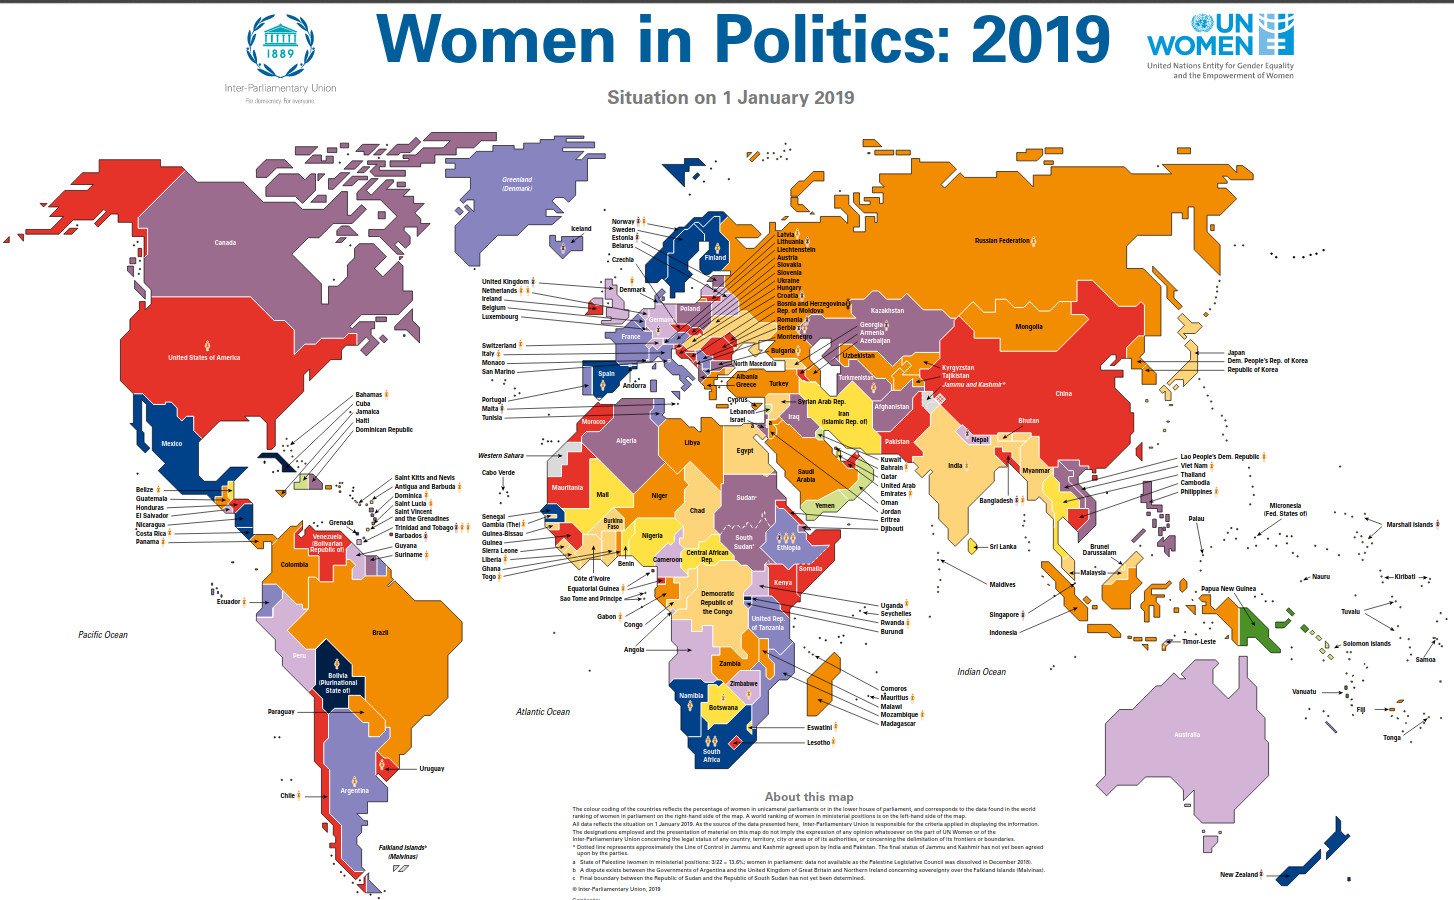 women in politics